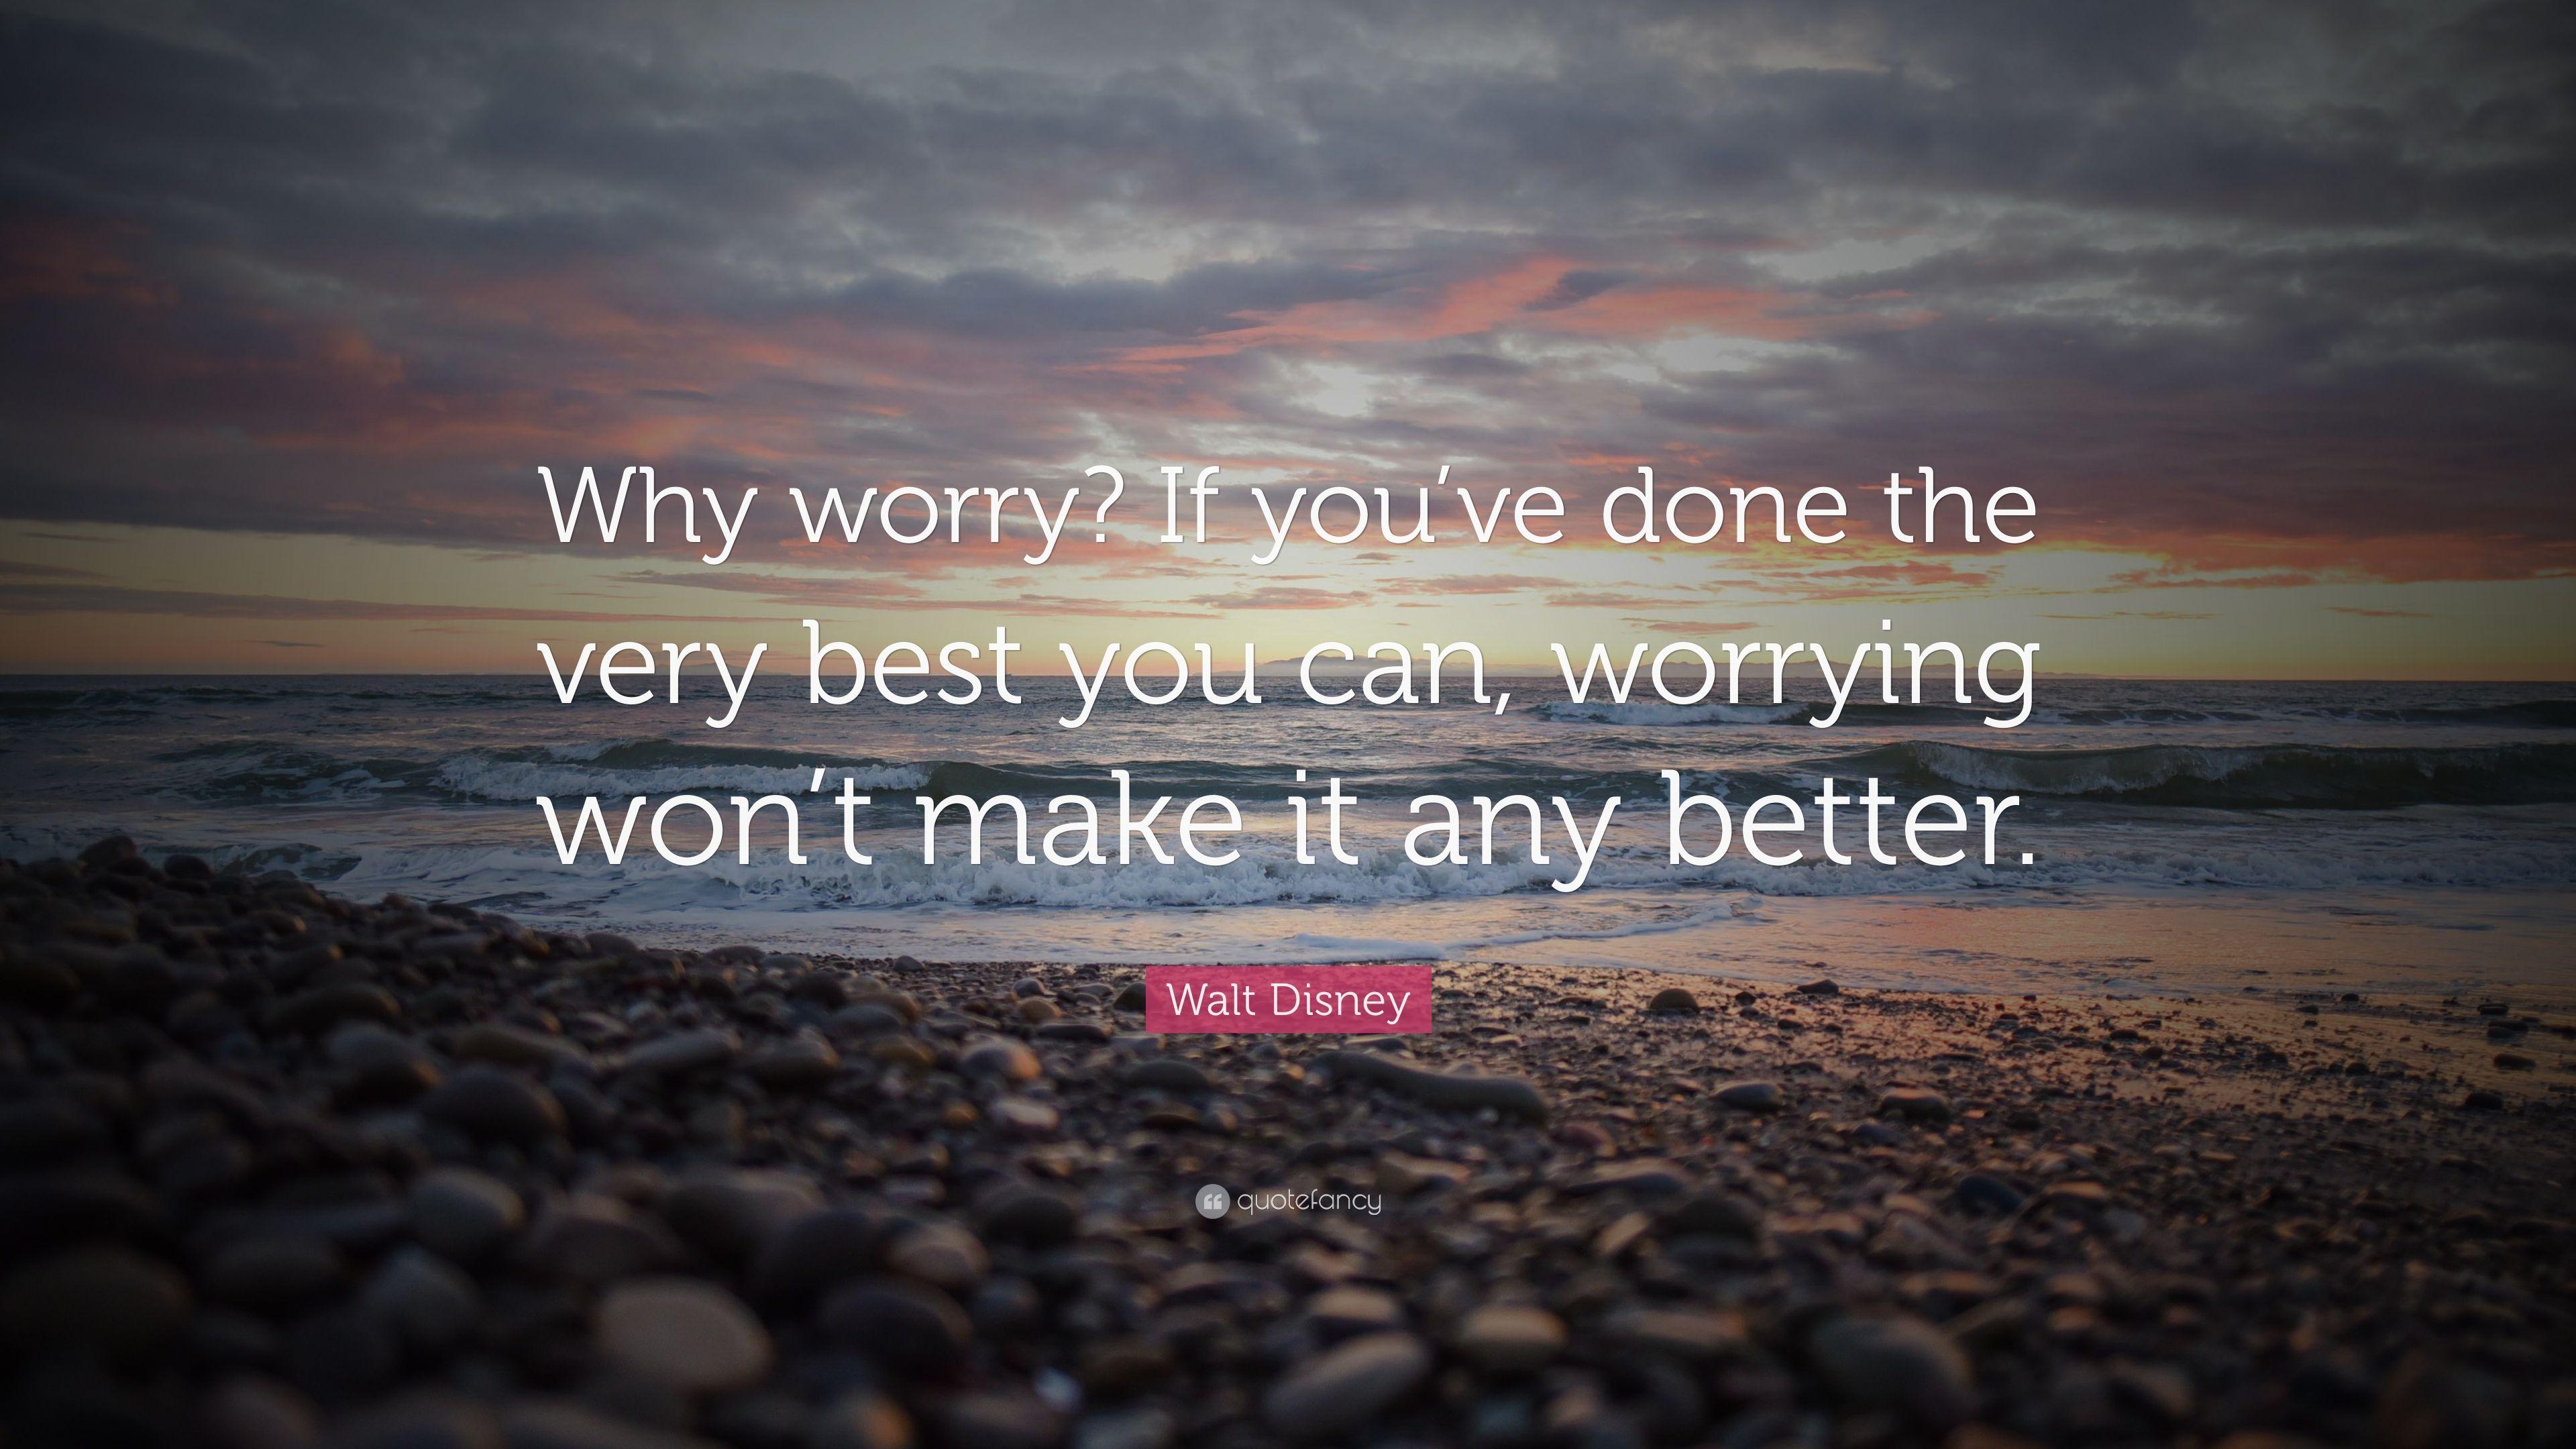 Walt Disney Quote: "Why worry? 